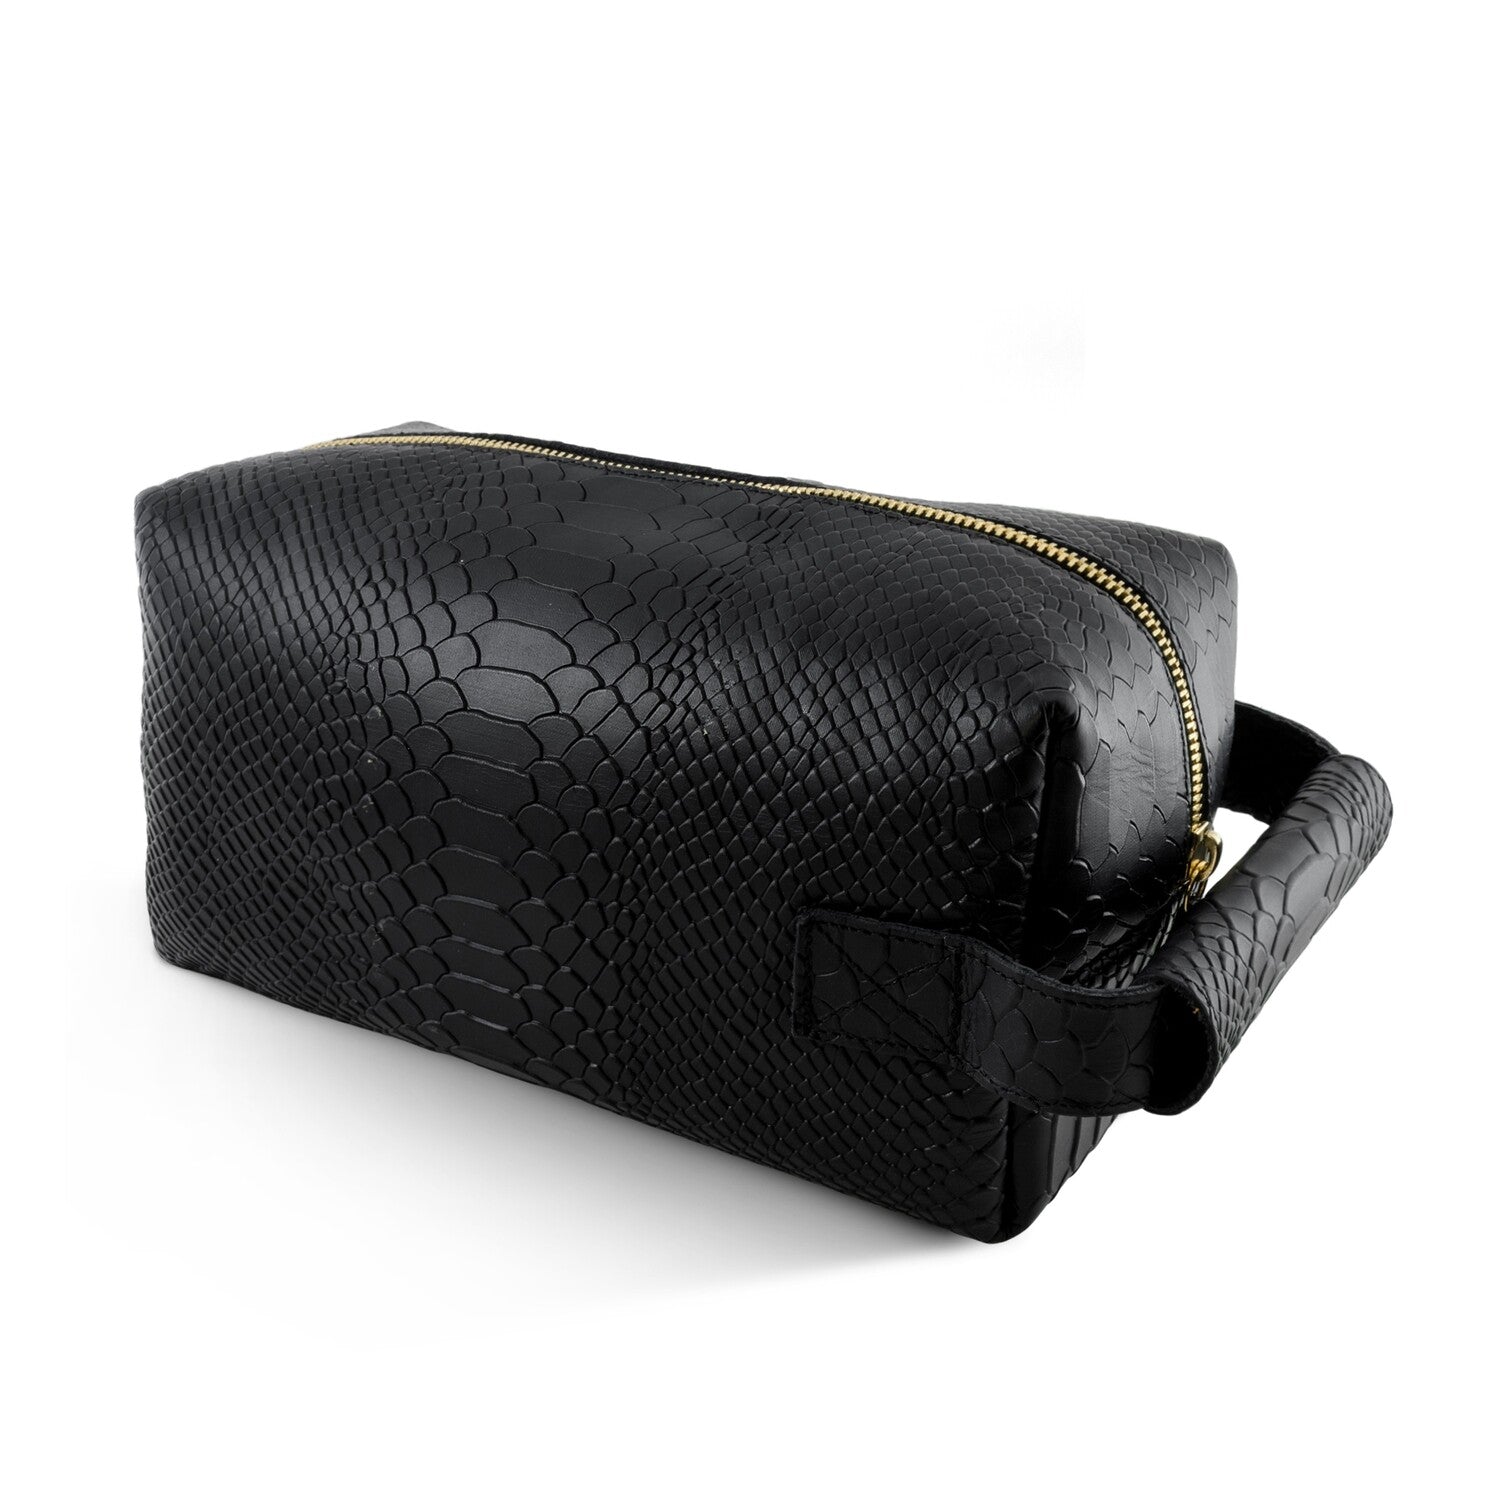 Black Python Embossed Gold Zipper Toiletry Bag